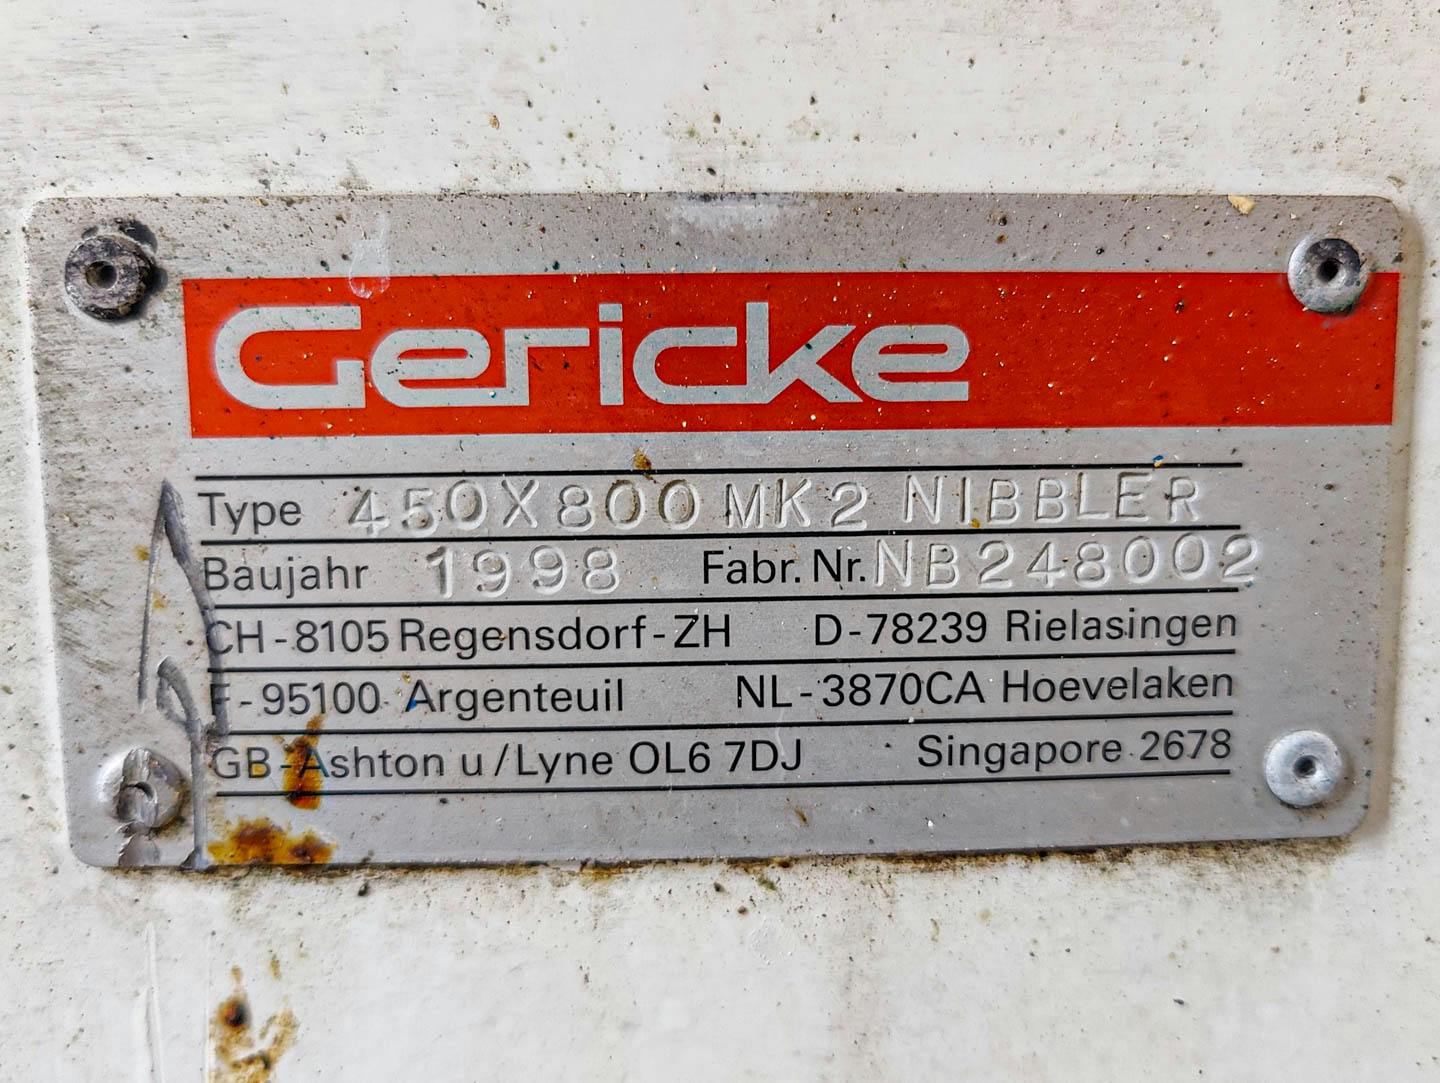 Gericke 450x800 MK2 NIBBLER - Ситовый гранулятор - image 11